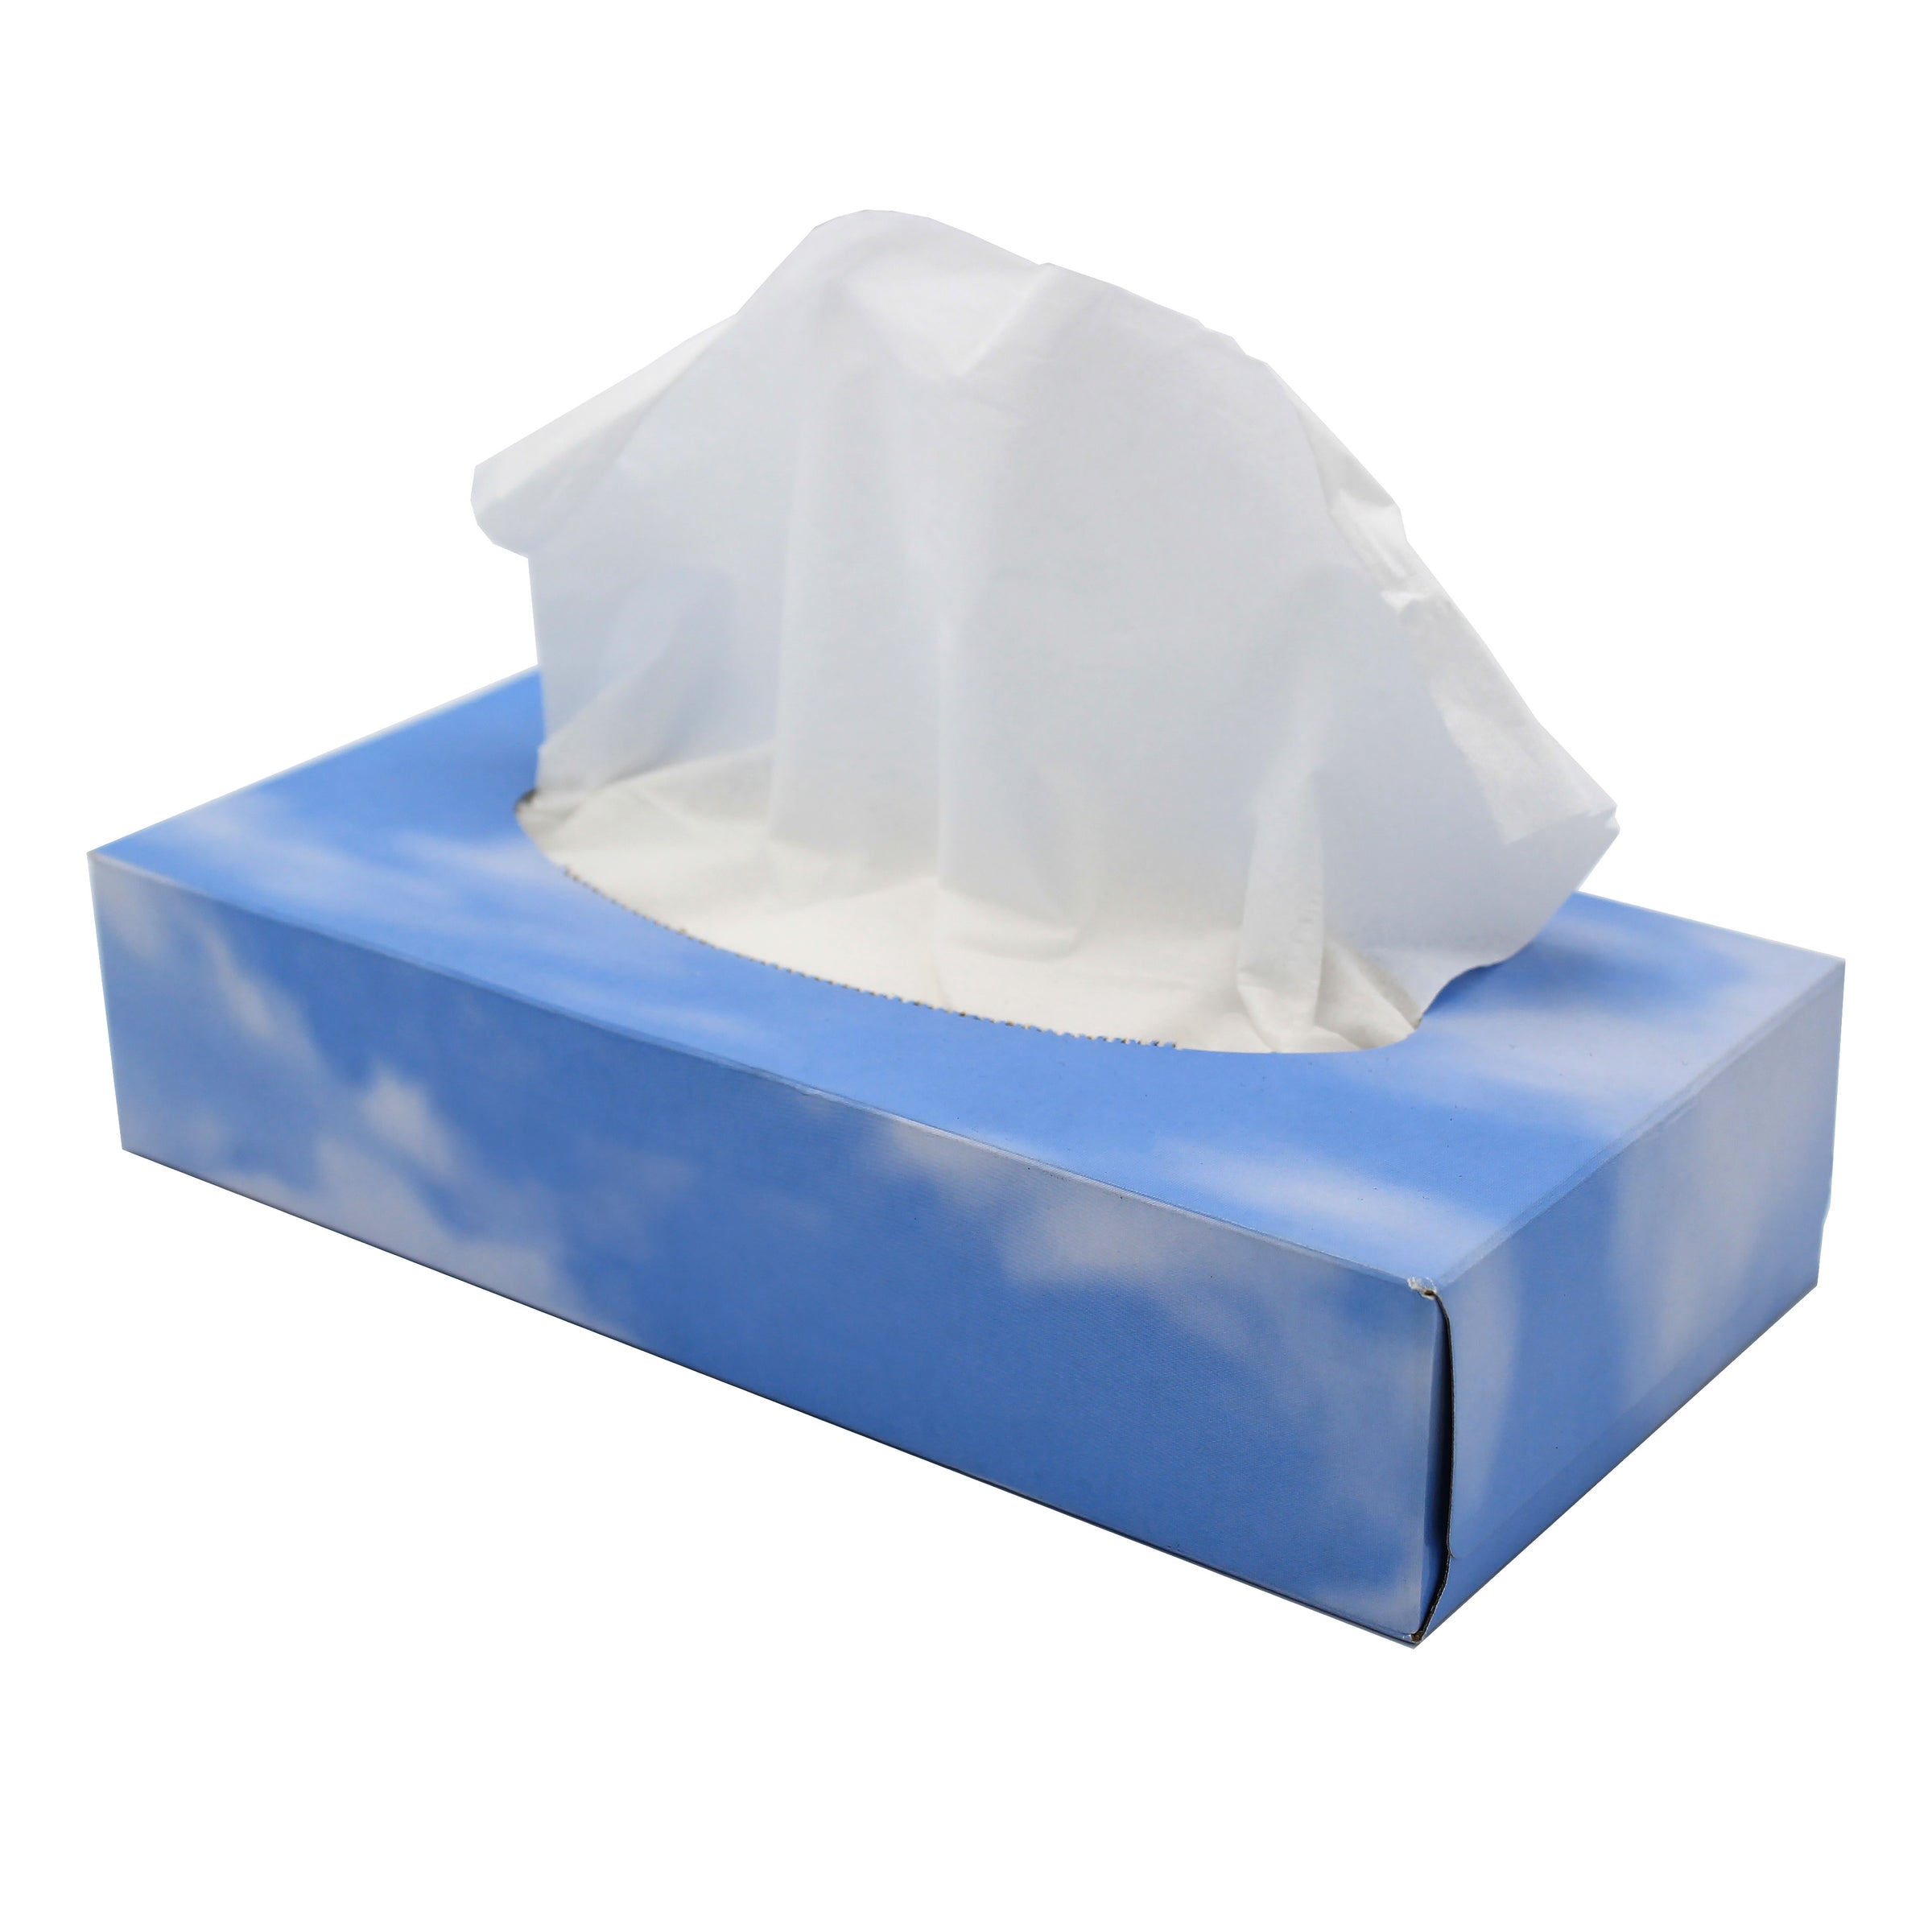 Soft White Facial Tissues, Box of 100